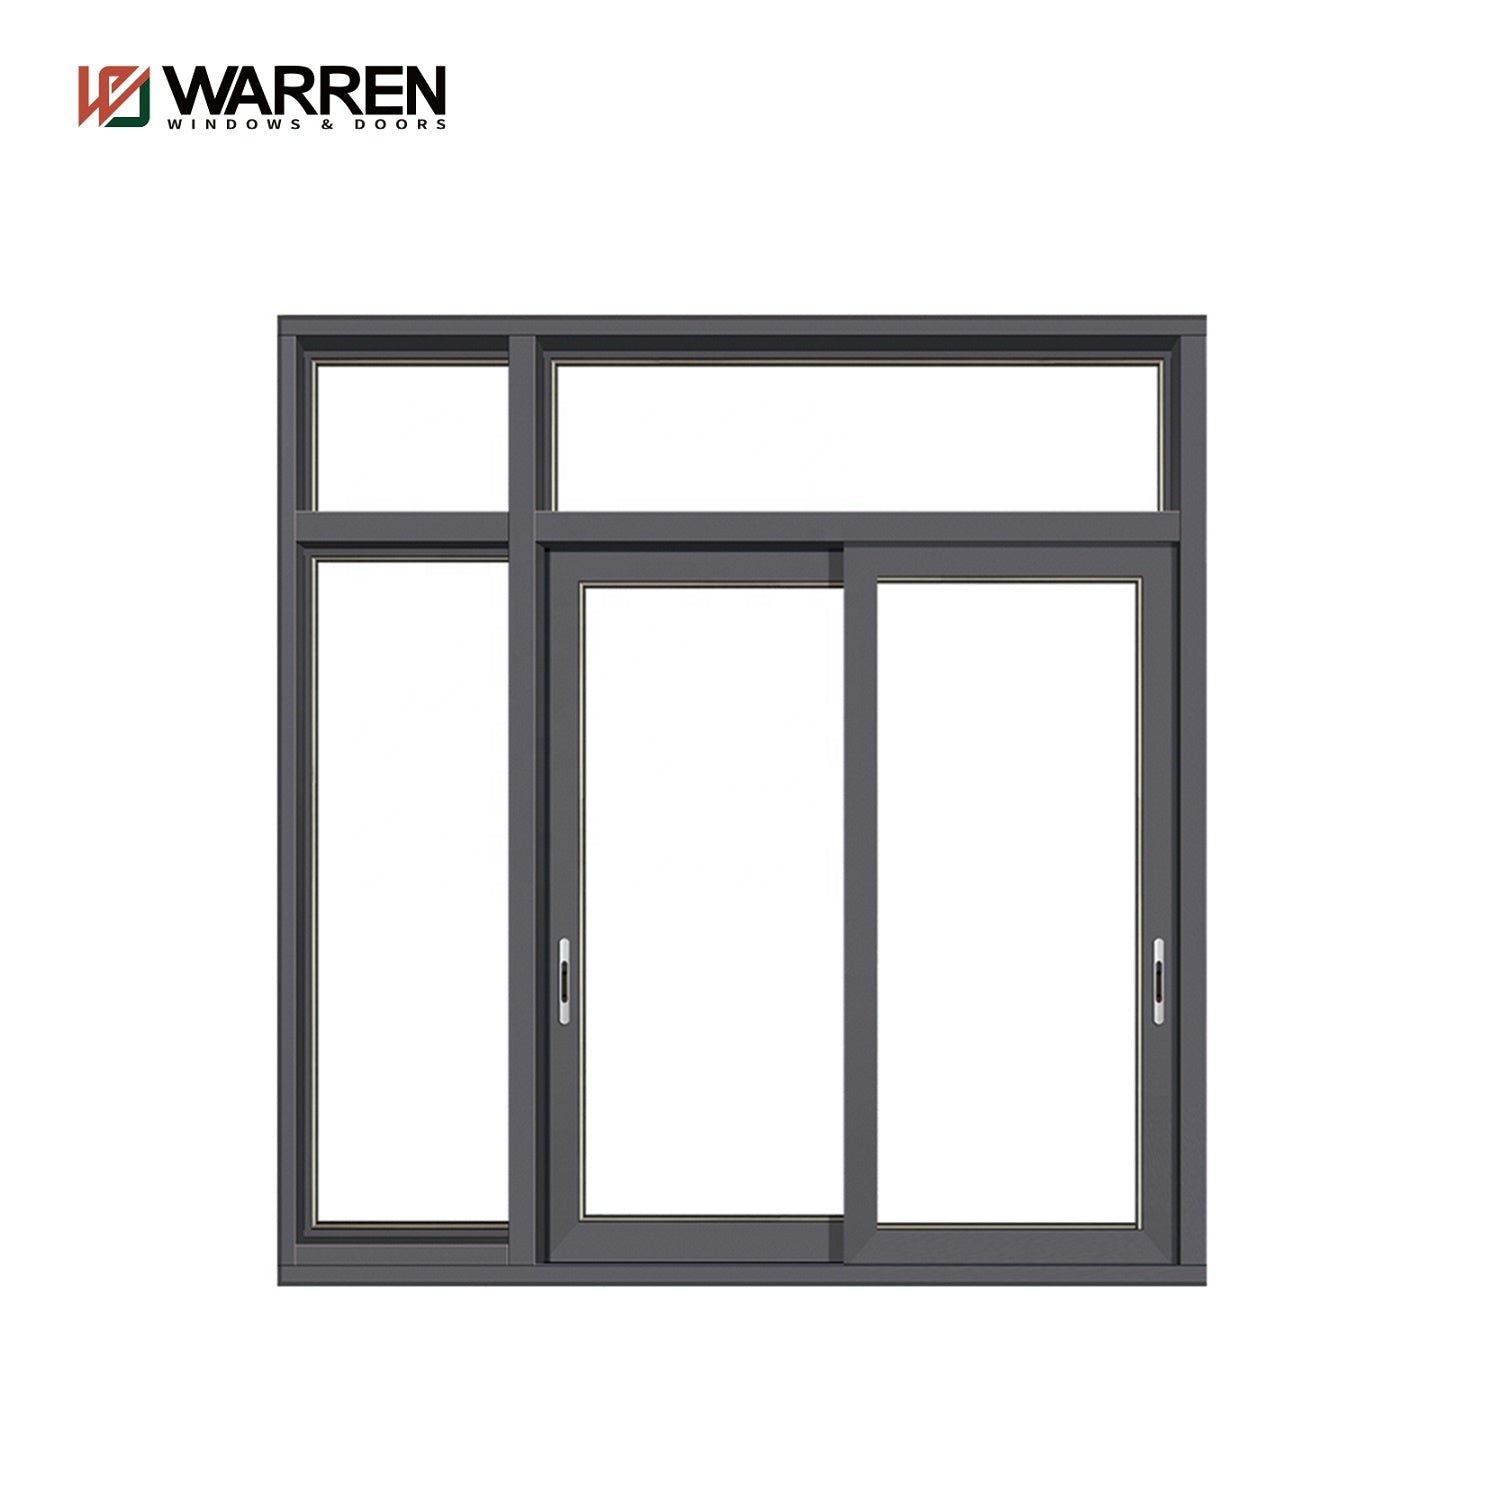 Warren made in china America standard sliding window 96x36 customized size doors